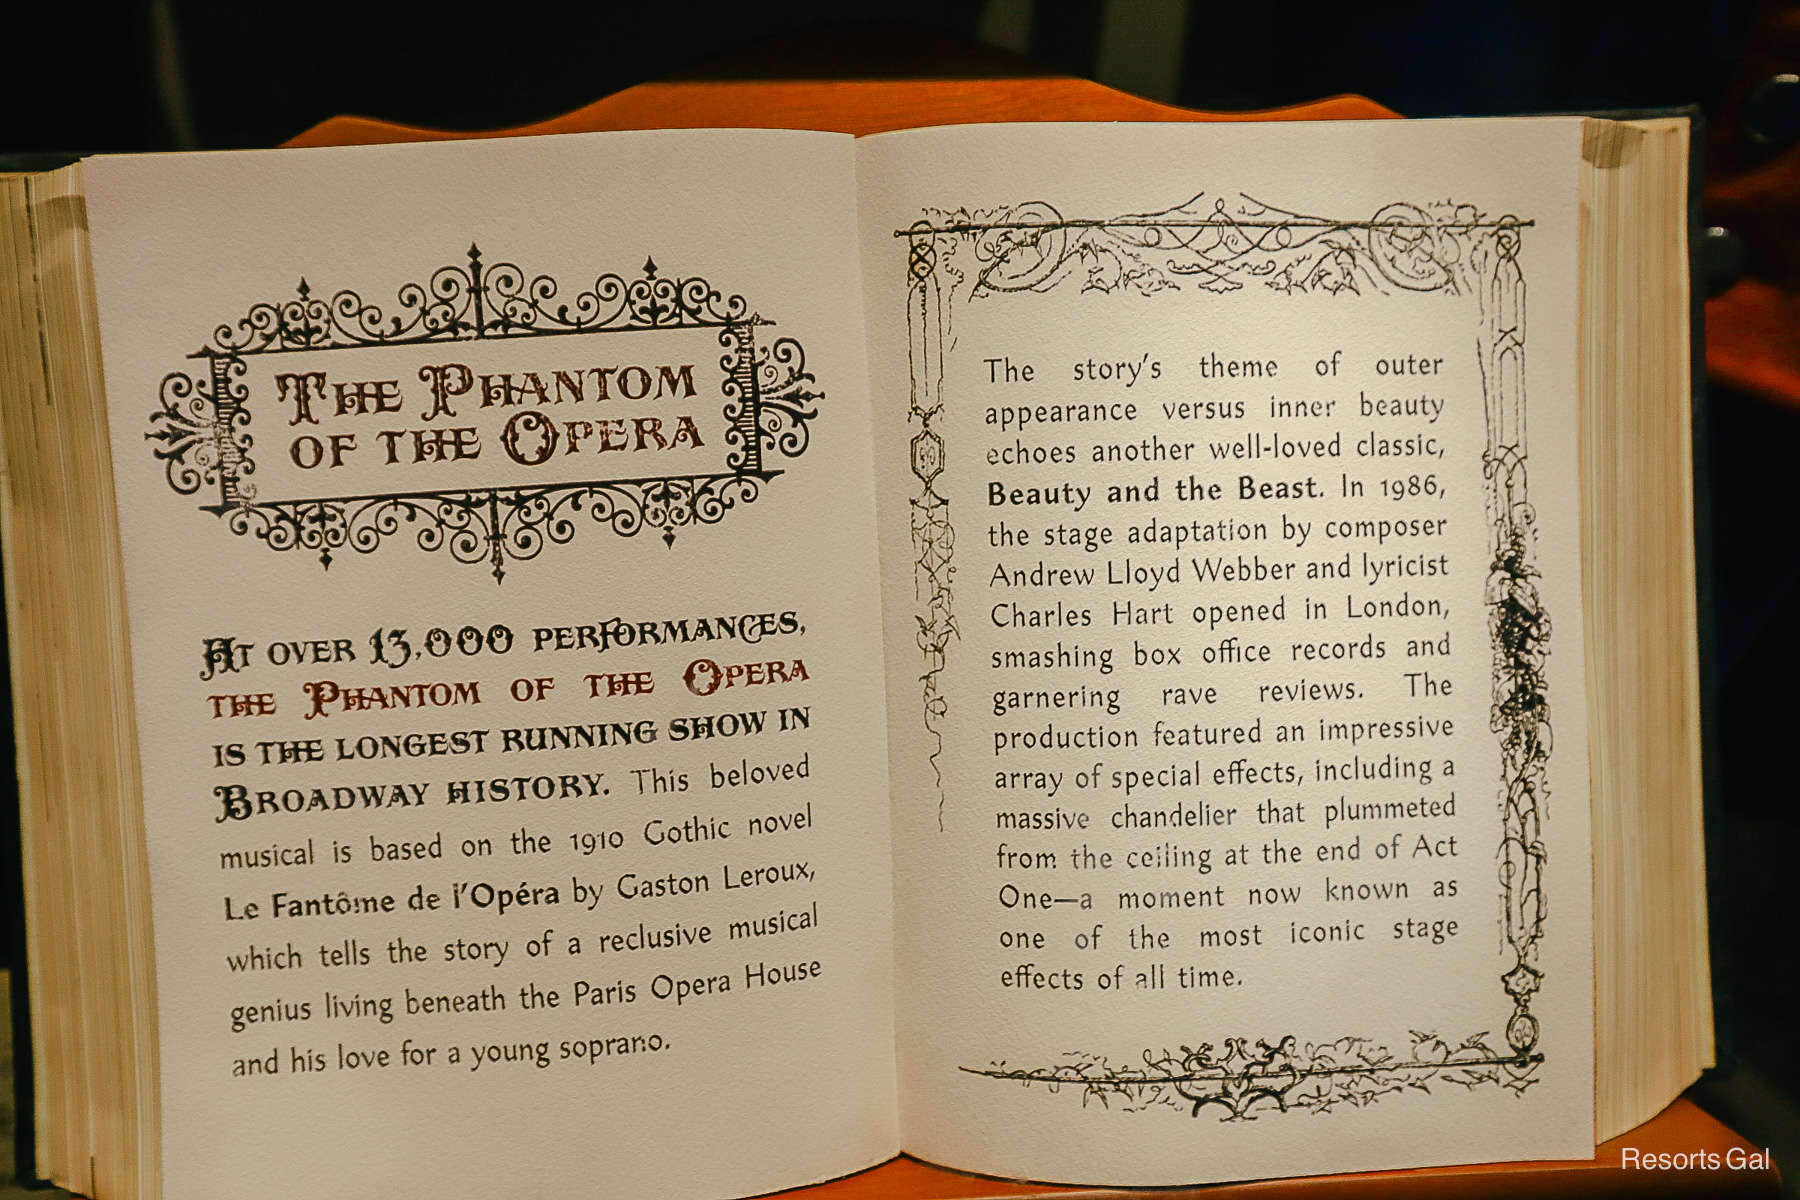 The Phantom of the Opera storybook